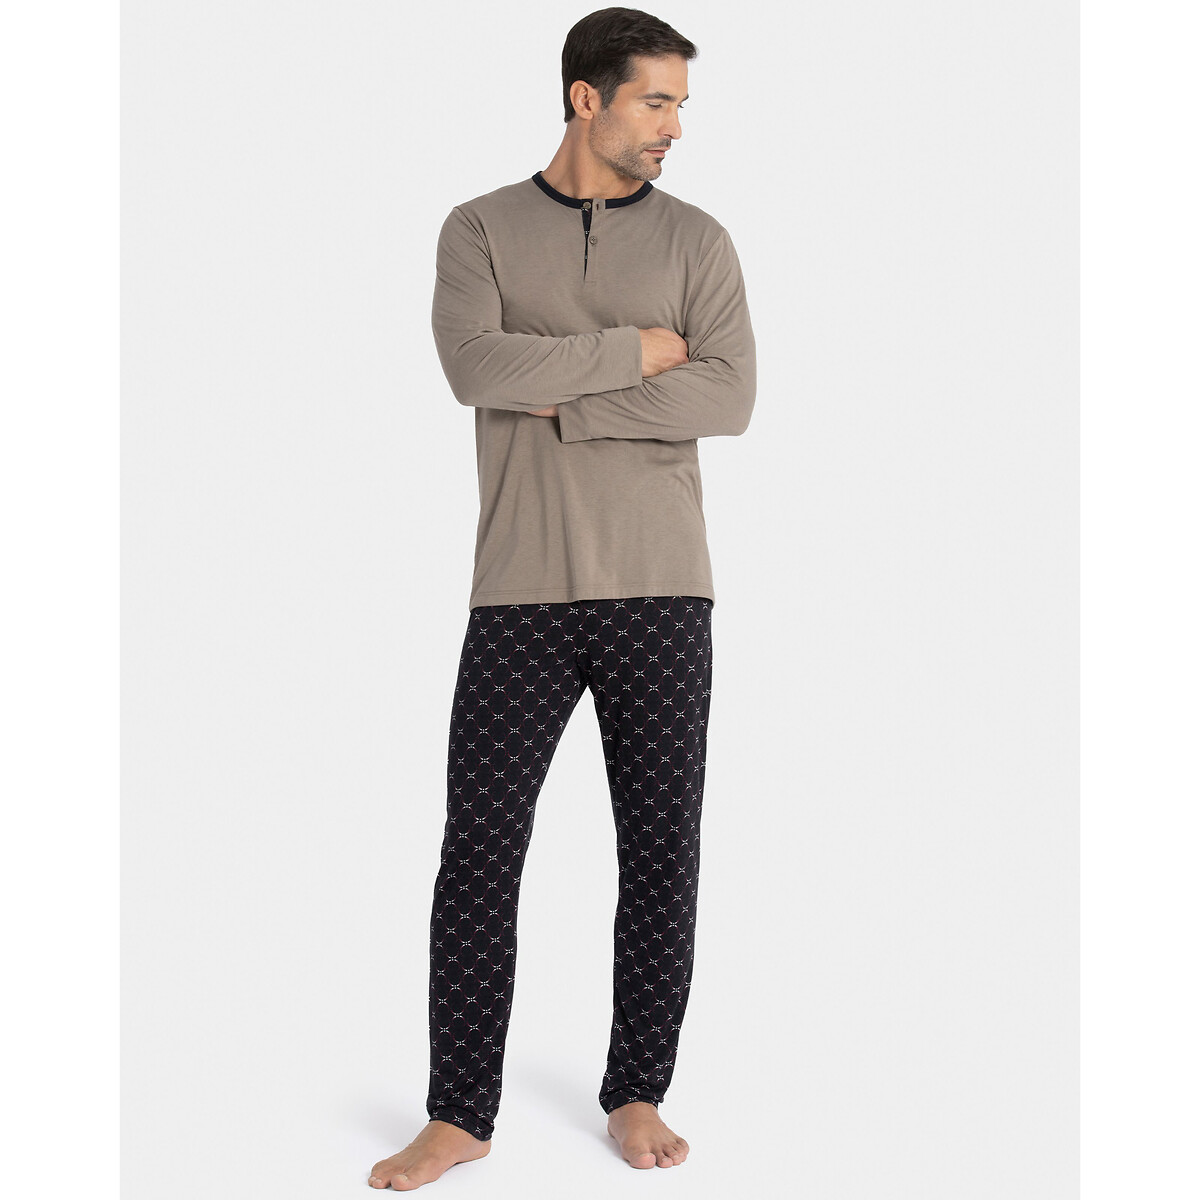 Pyjamas with Buttoned Crew Neck